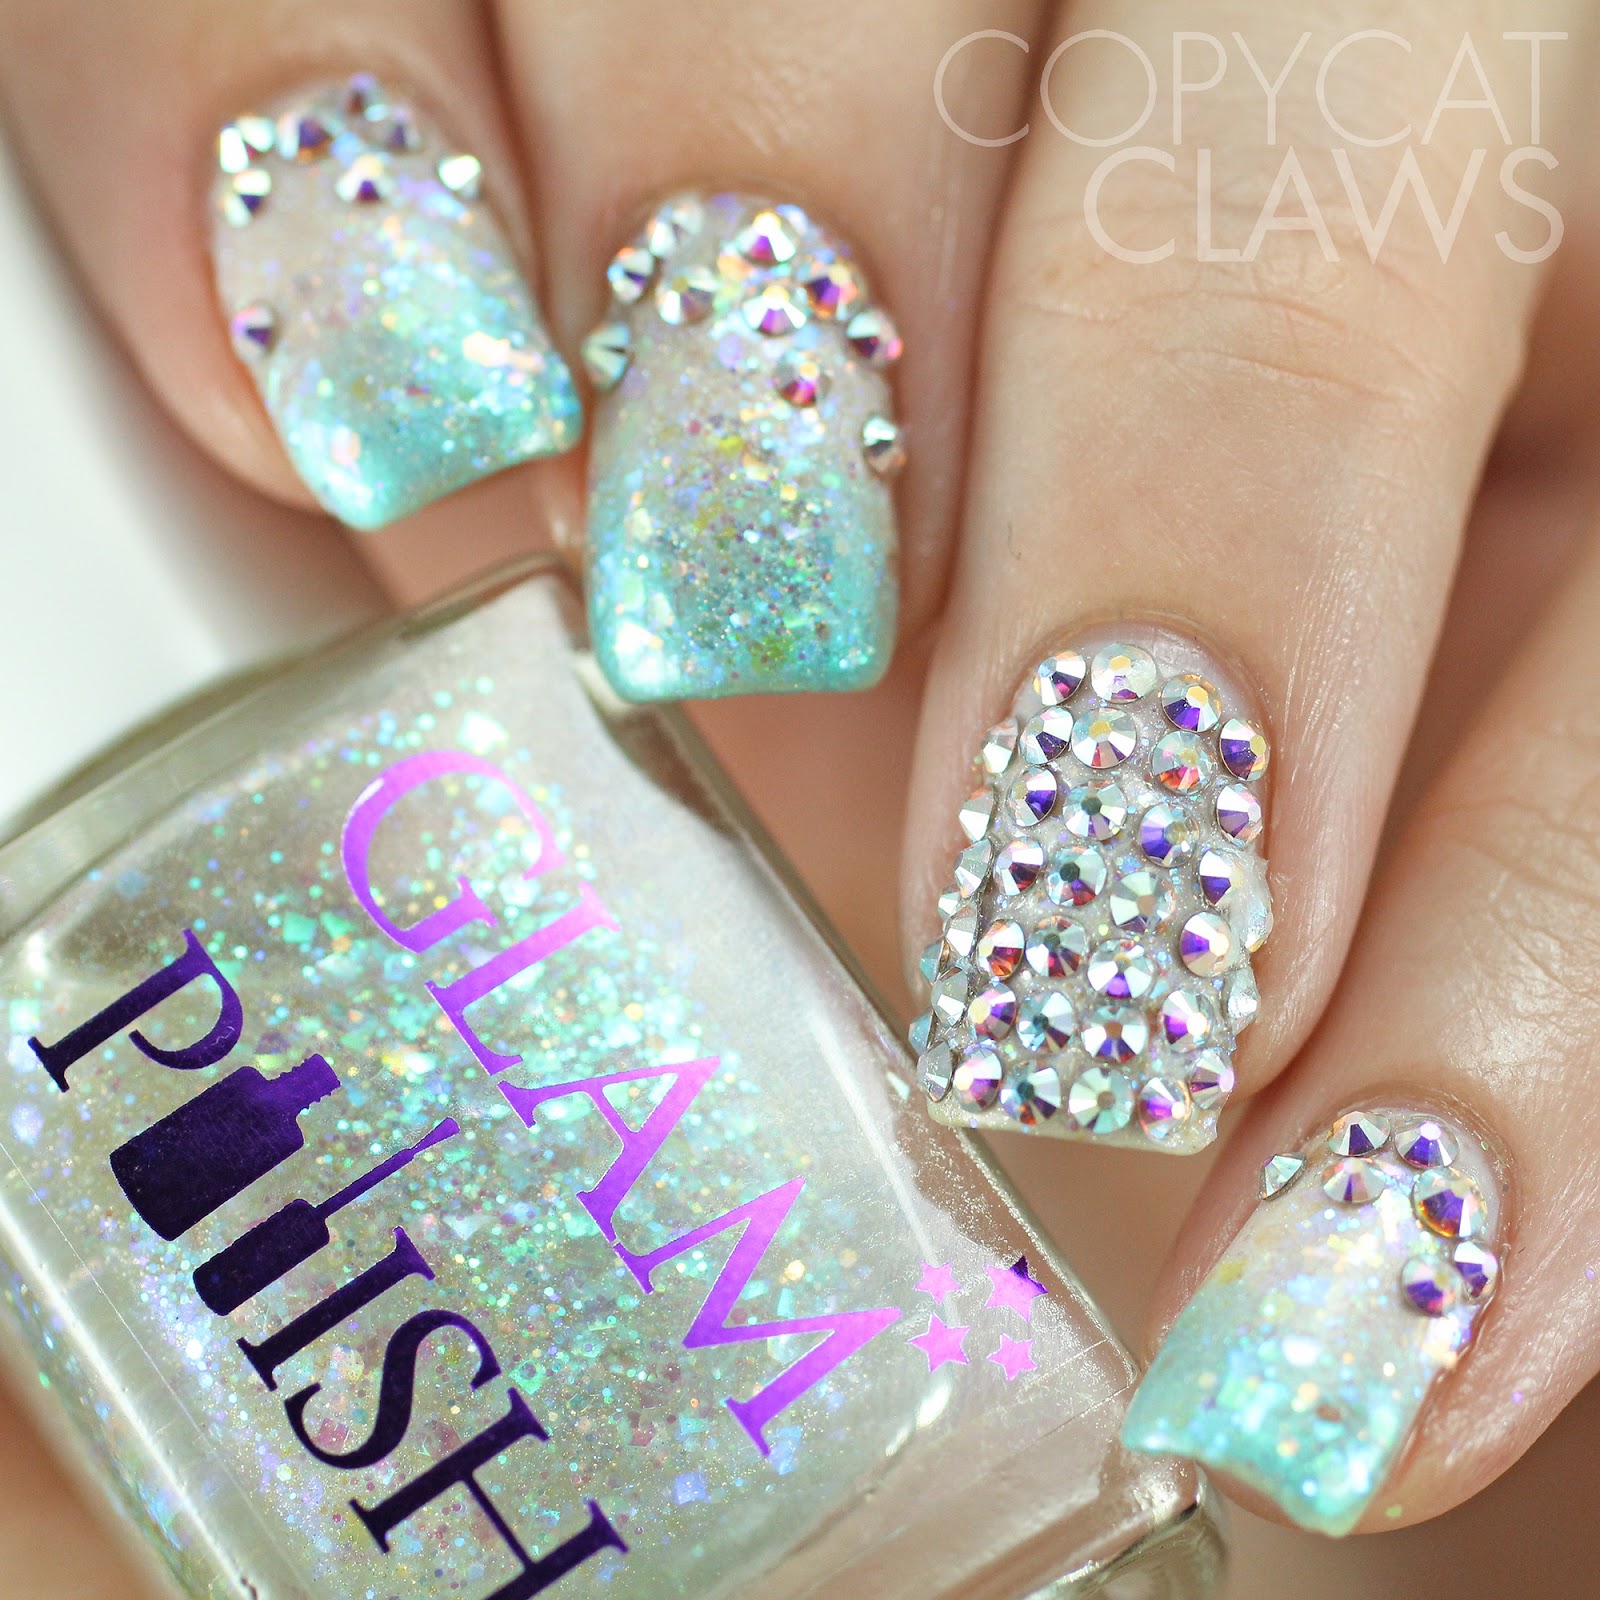 Copycat Claws: Swarovski Crystal Nails - Inspired by Pinterest